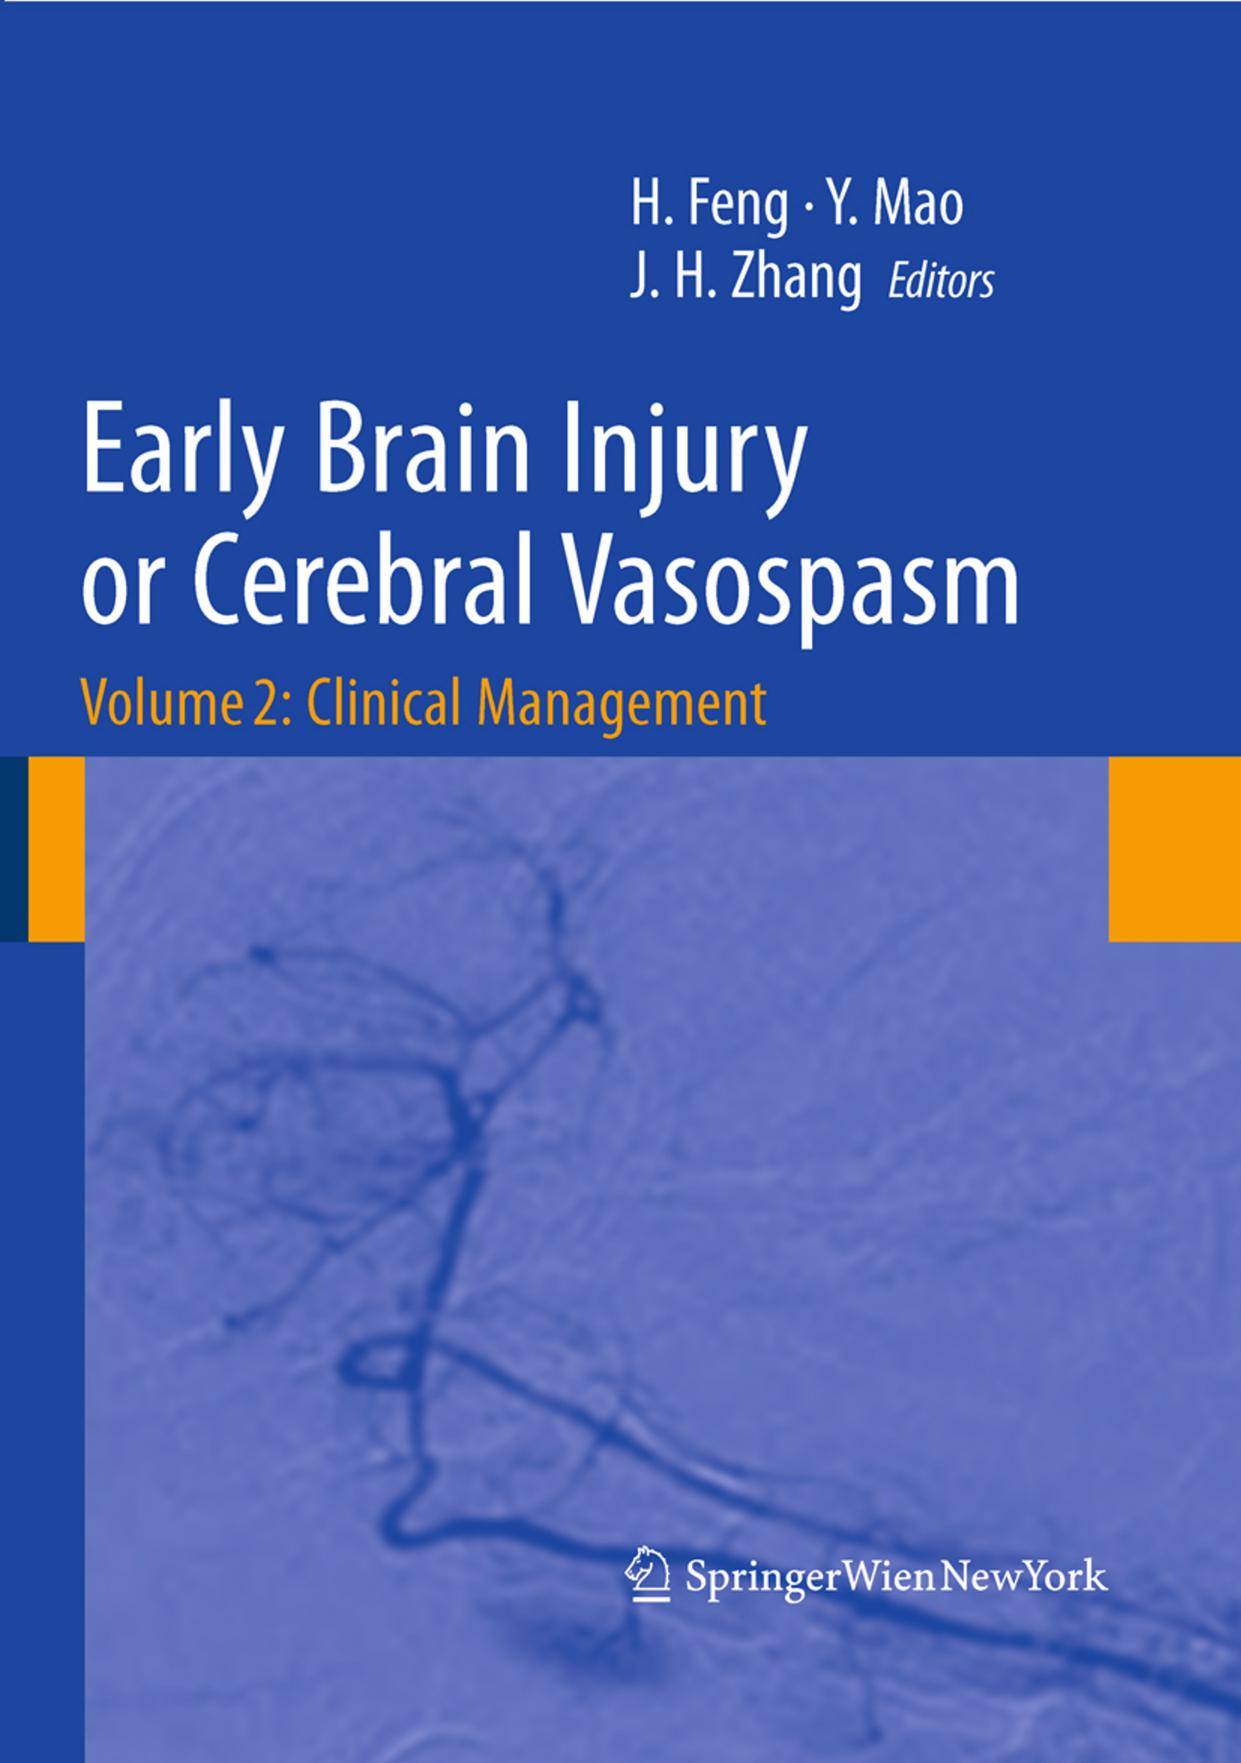 Early Brain Injury or Cerebral Vasospasm-Vol 2- Clinical Management - Hua Feng, Ying Mao, John H. Zhang.jpg